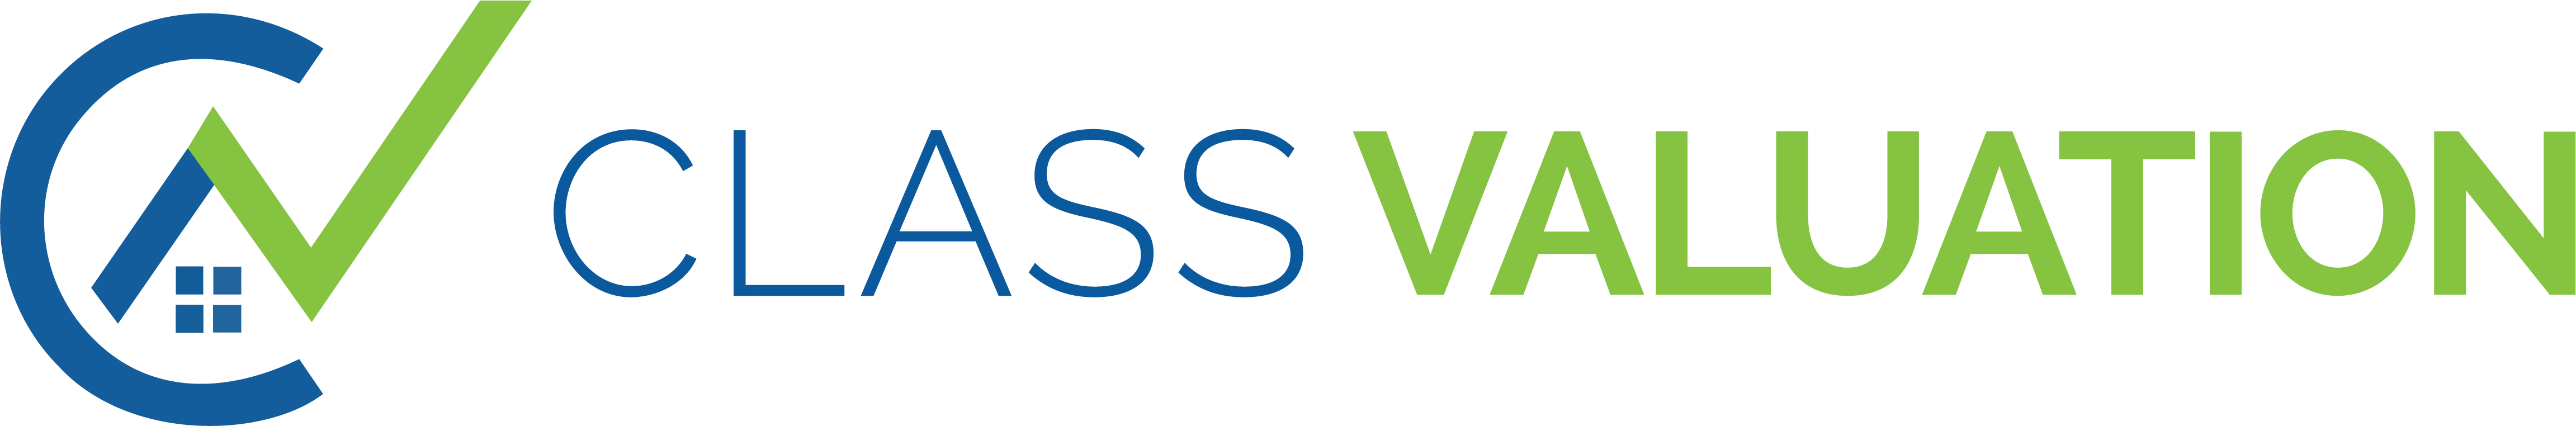 class valuation logo